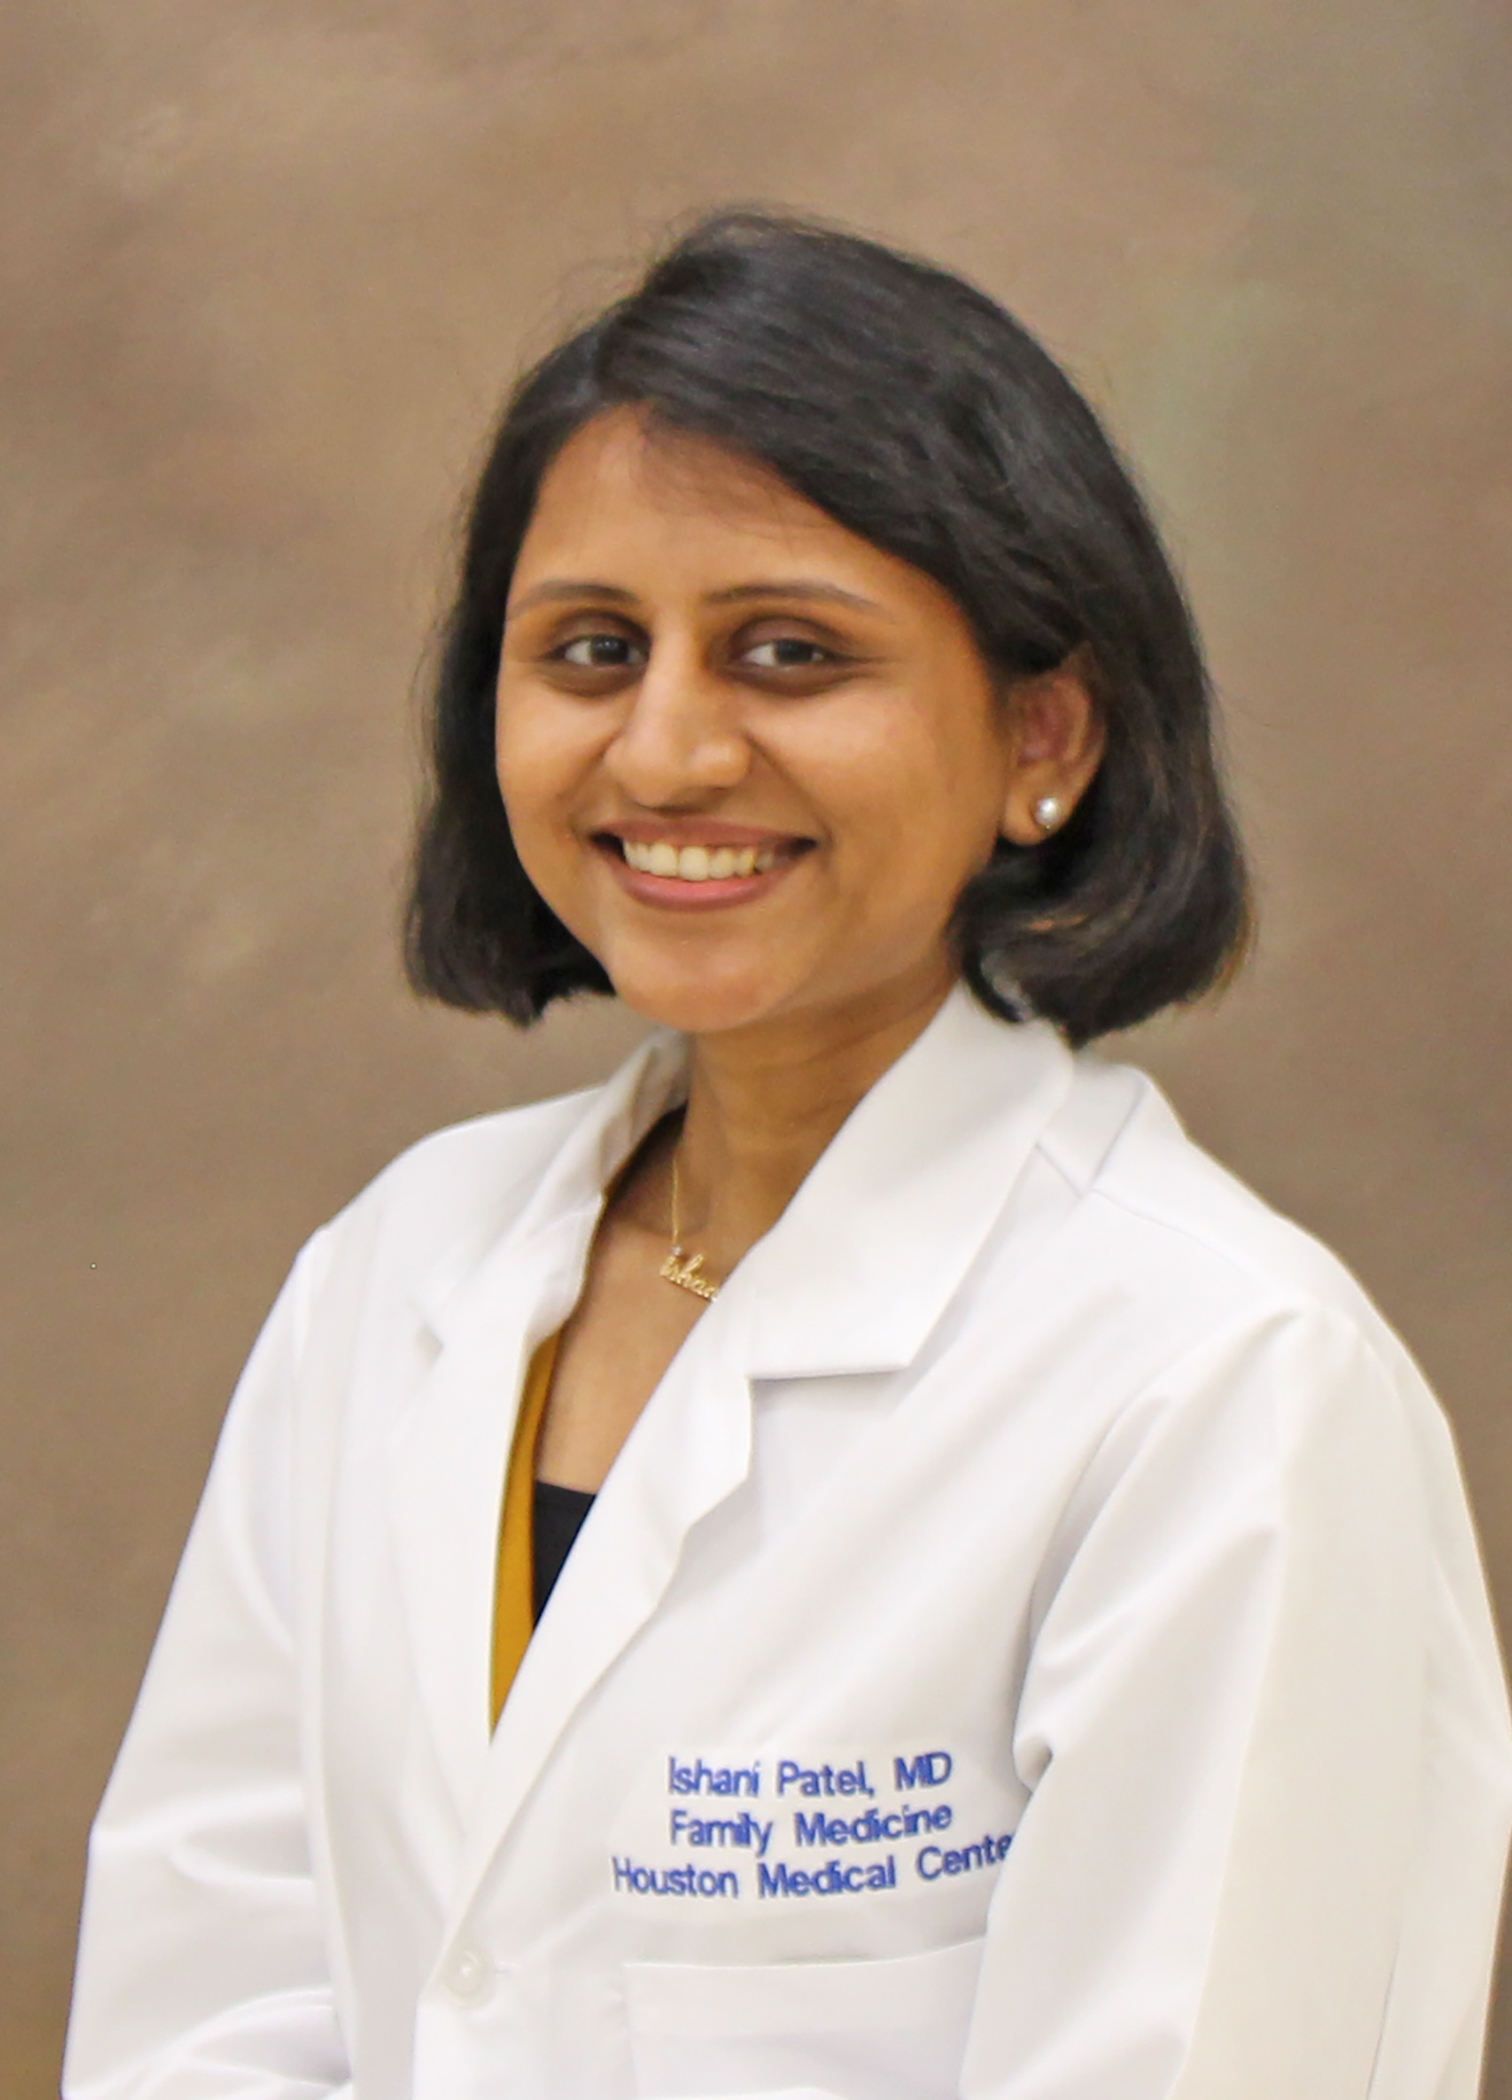 Ishani Patel, MD